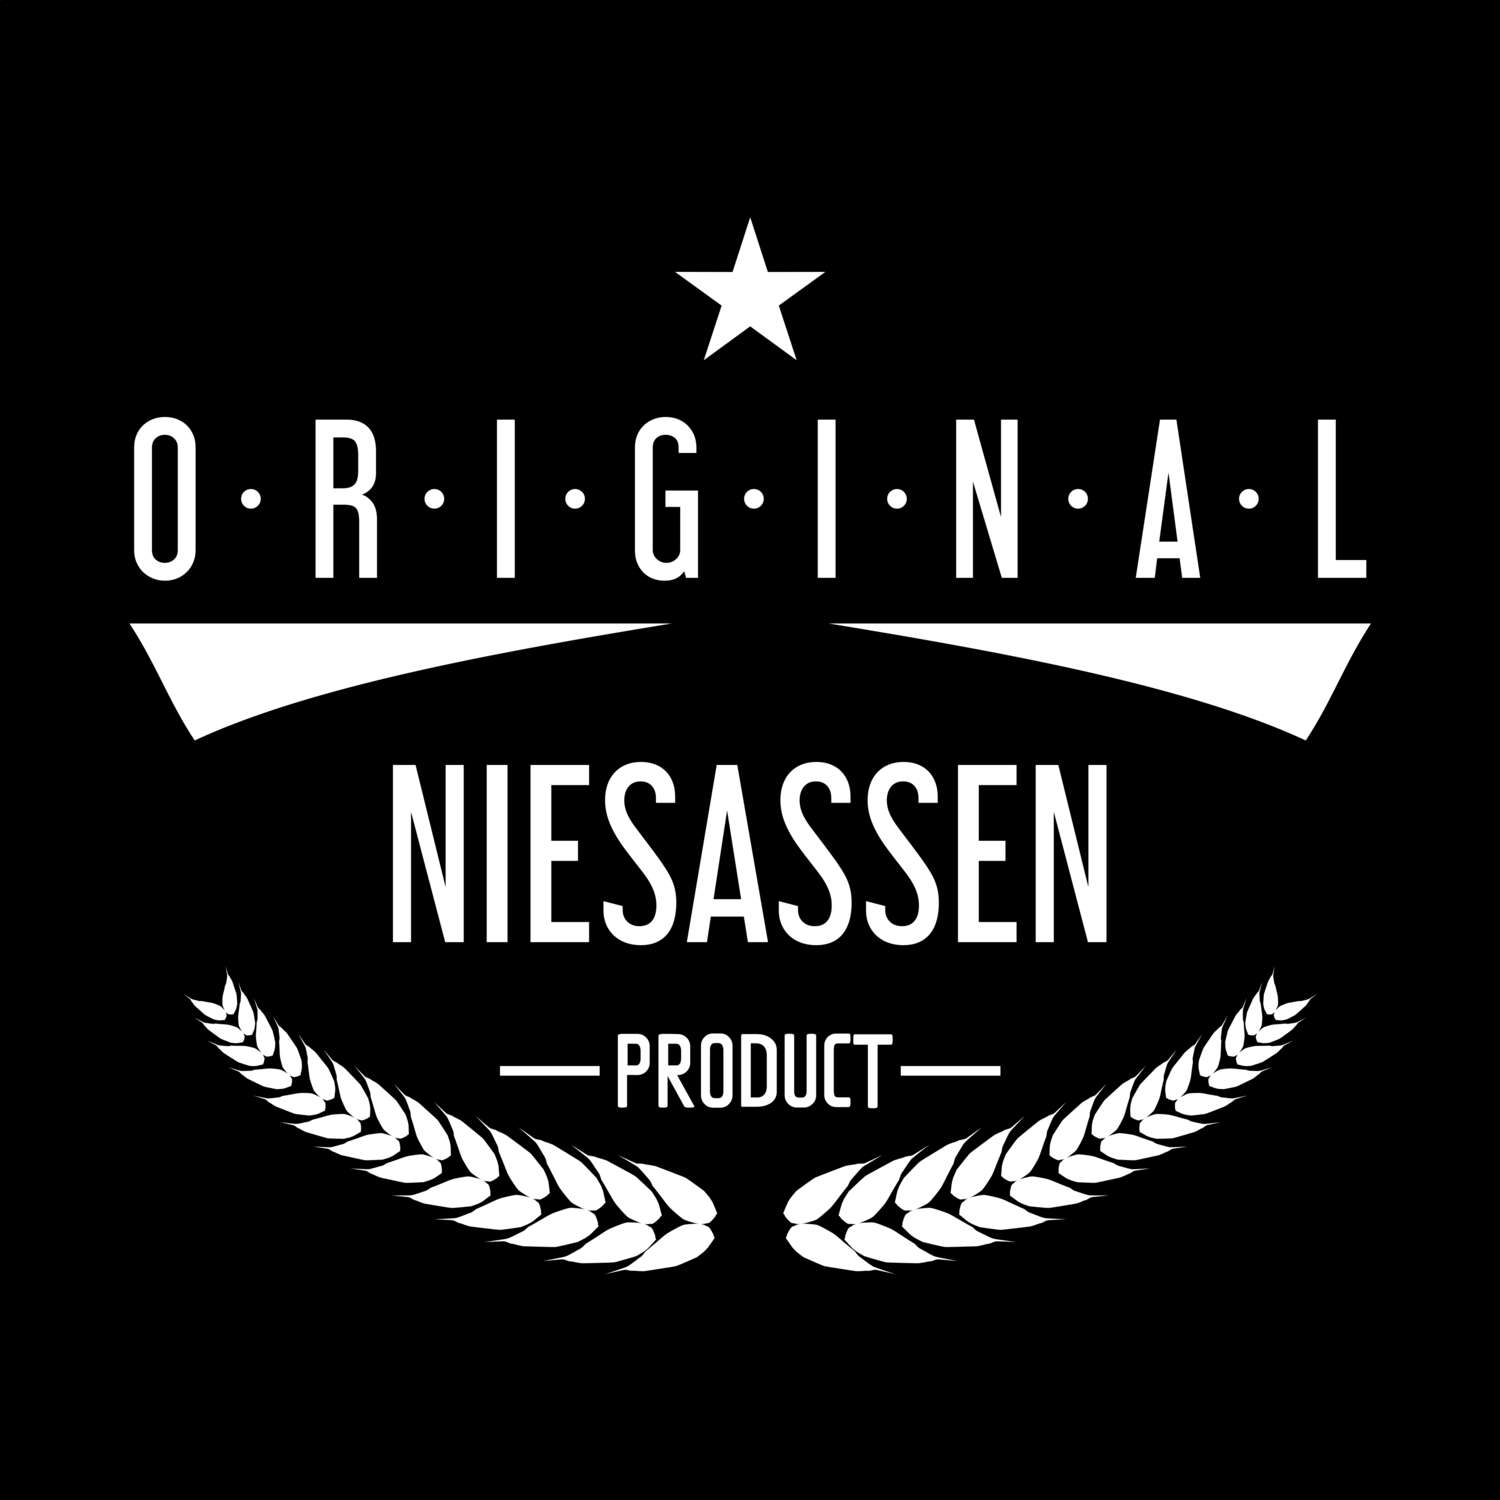 Niesassen T-Shirt »Original Product«